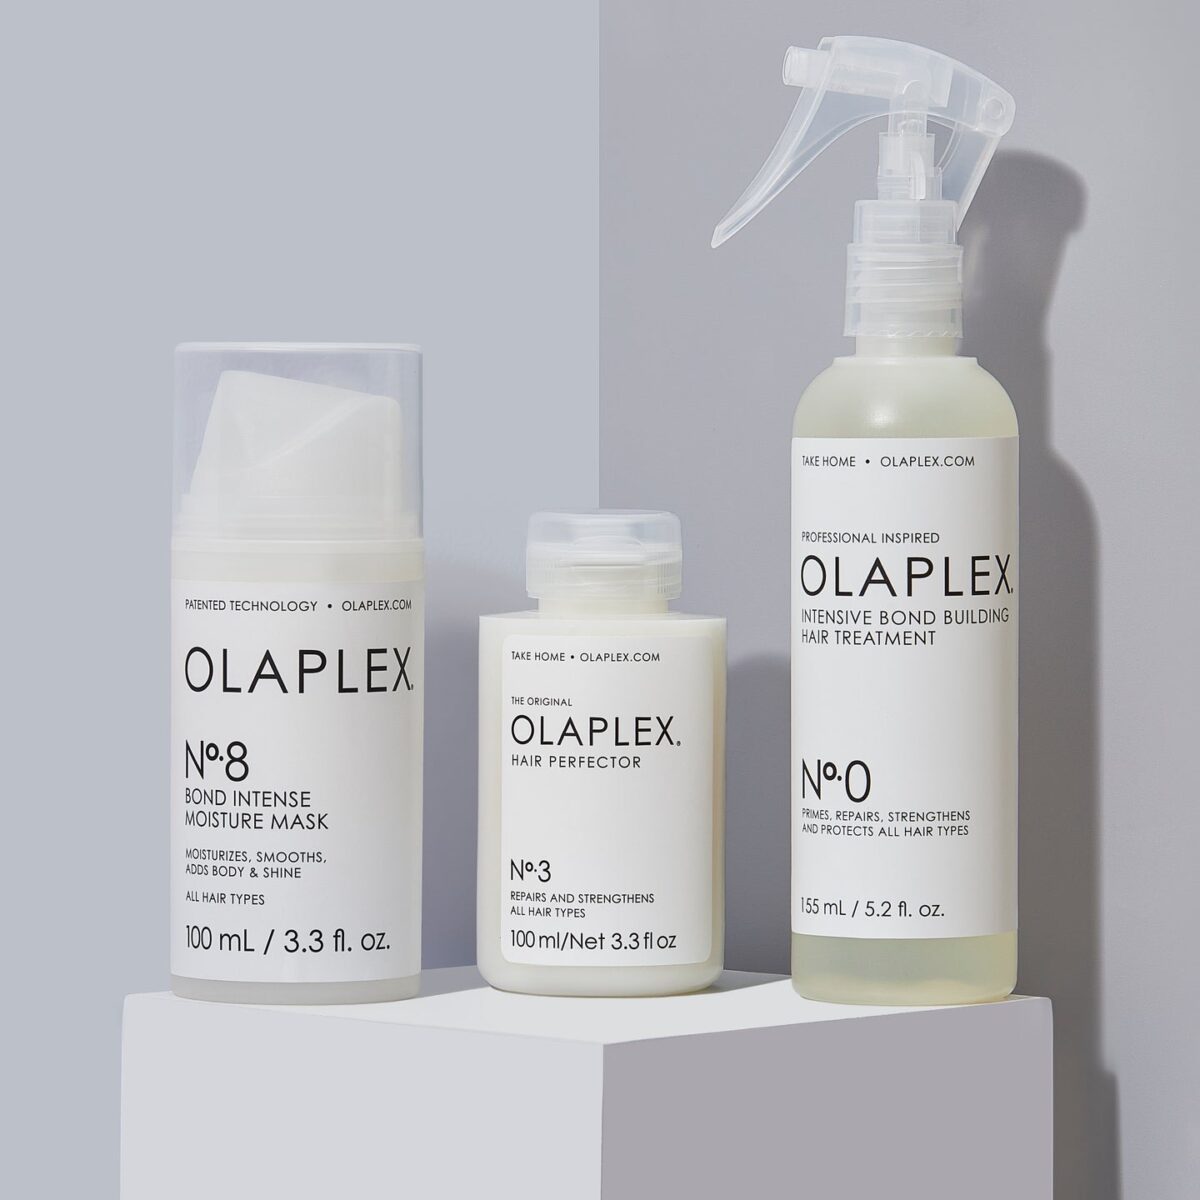  Olaplex, The Nº.0 Intensive Bond Building Hair Treatment